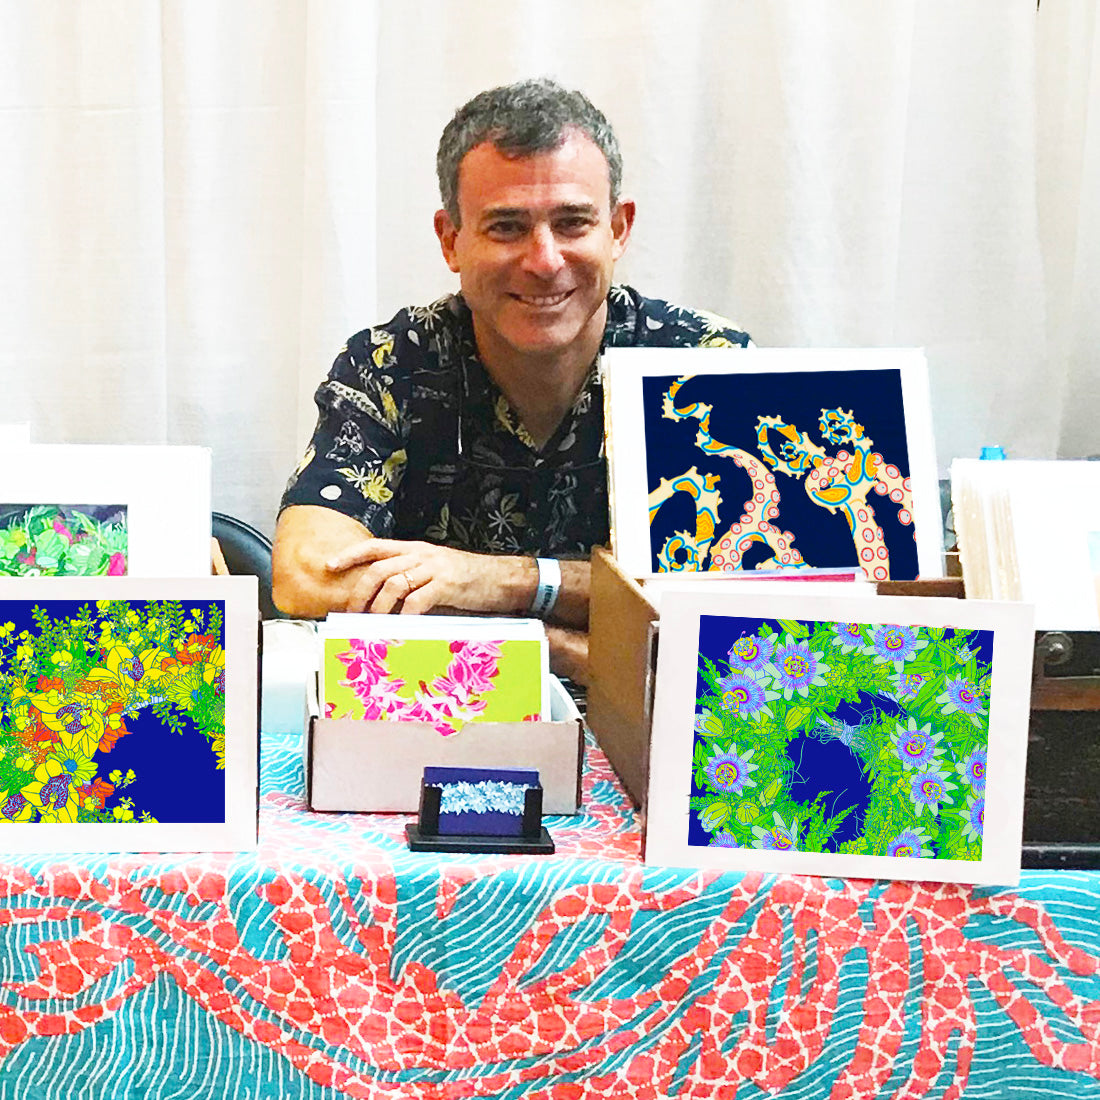 Judd Boloker Art of Hawaii - Made in Hawaii Festival